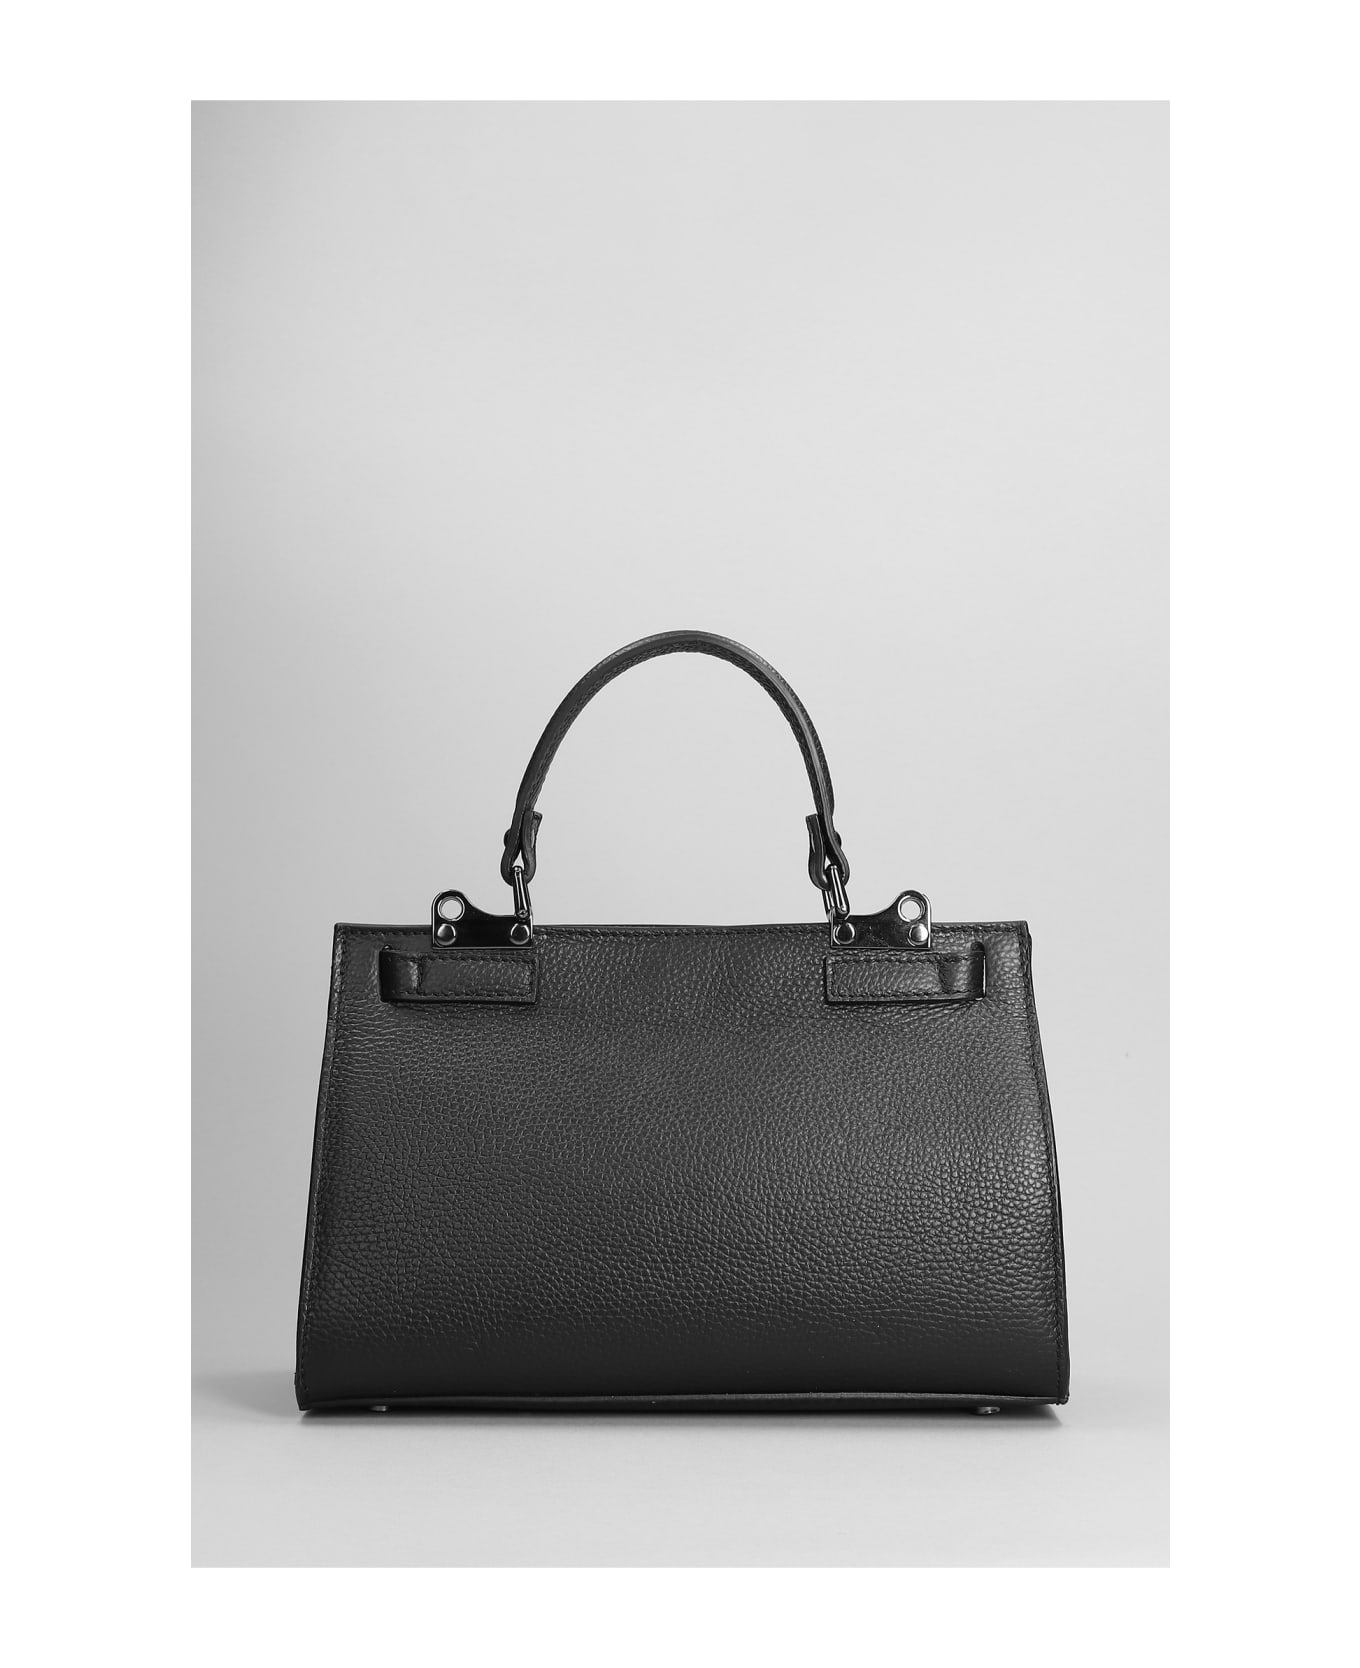 Marc Ellis Queen M Hand Bag In Black Leather - black